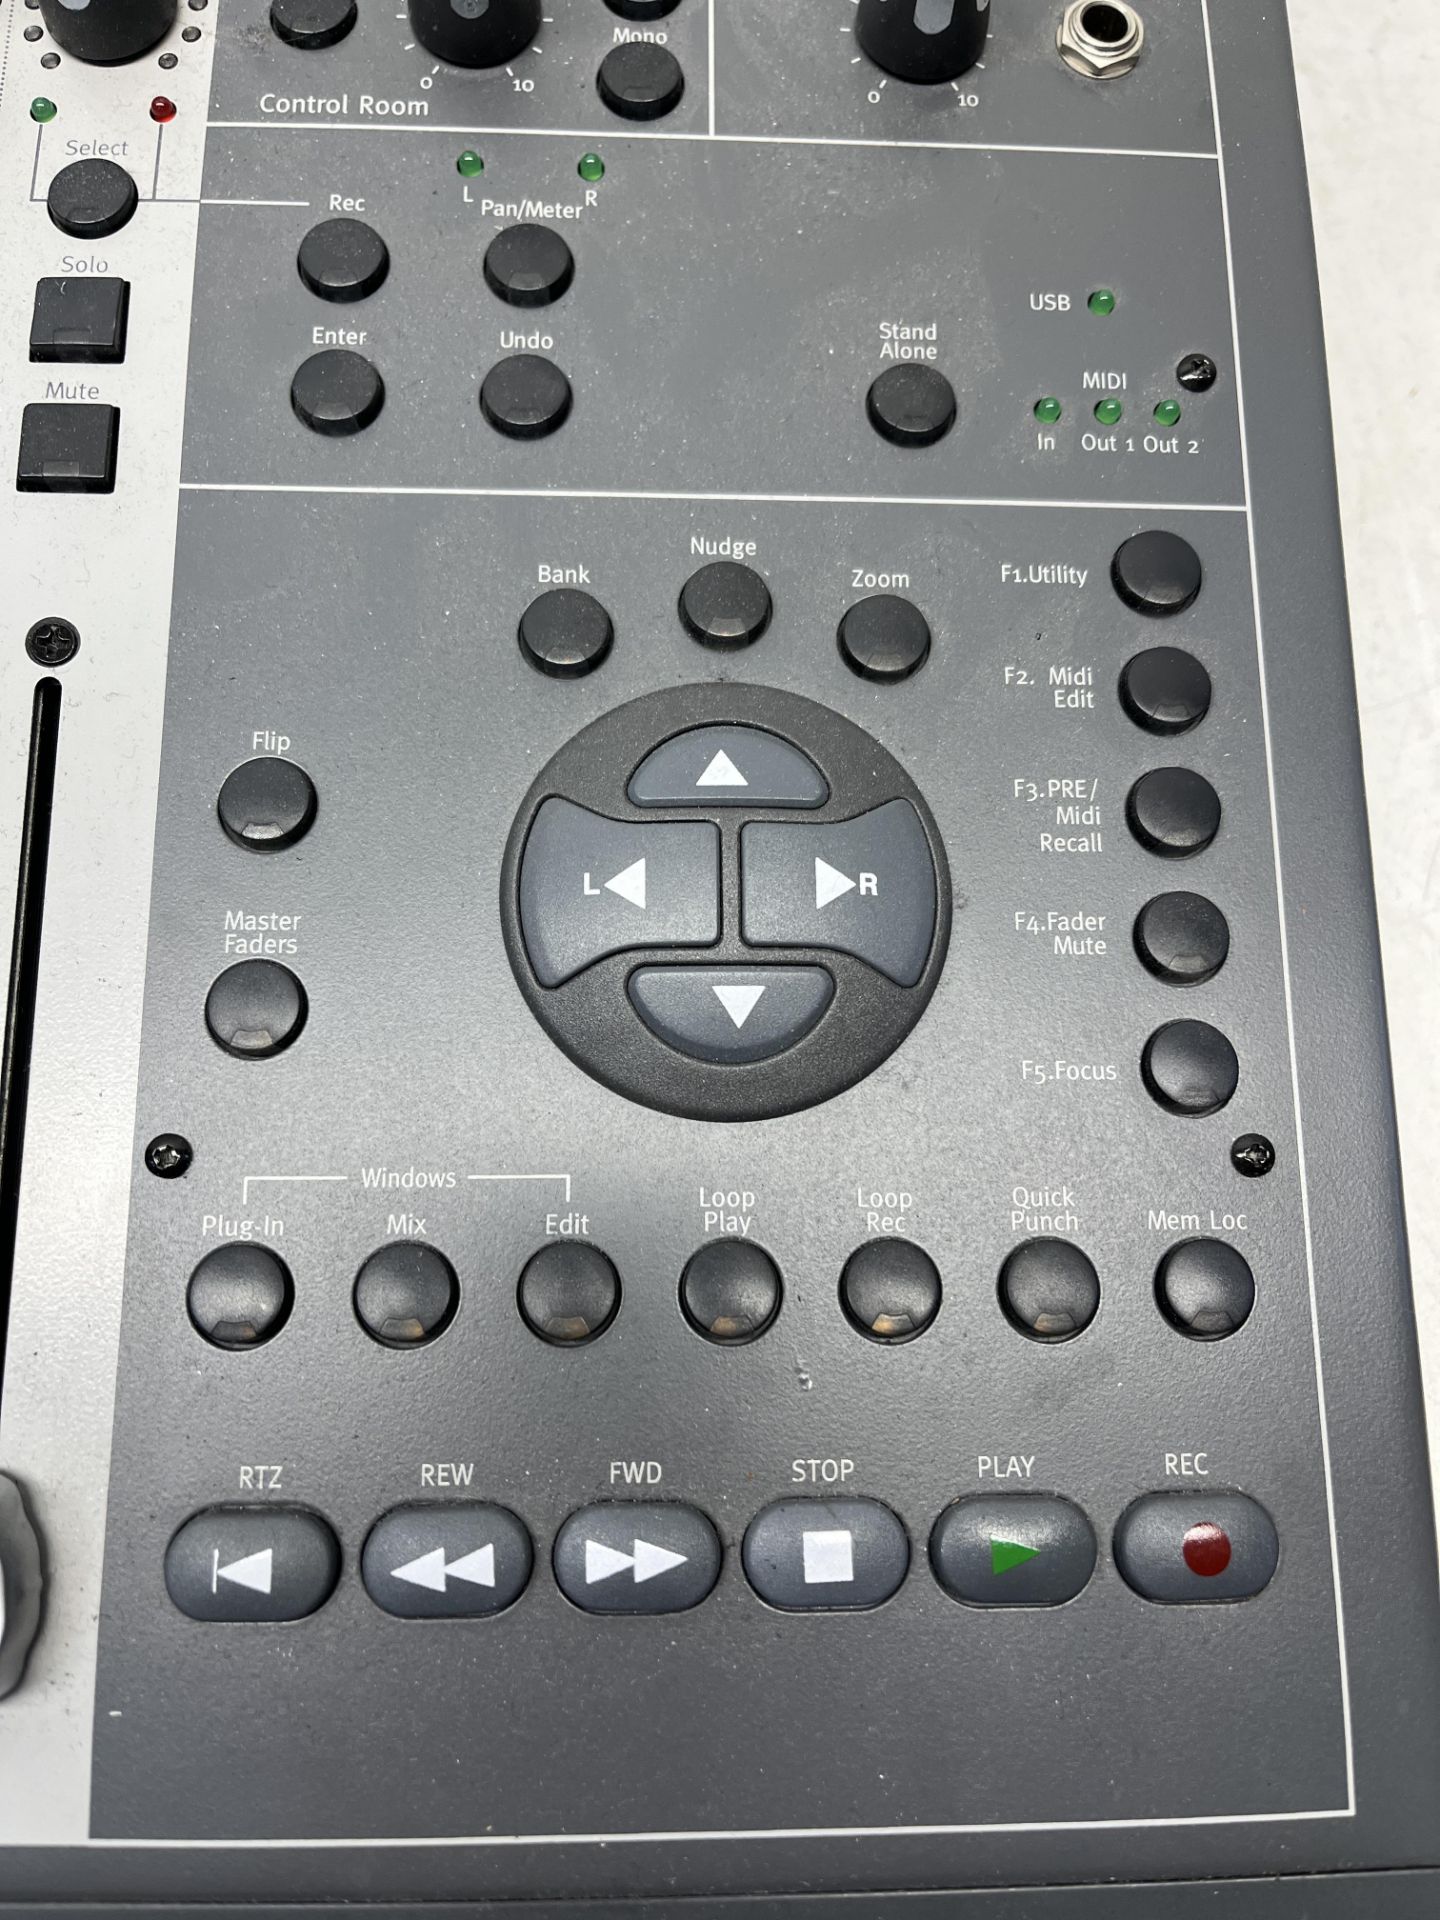 Digidesign Command 8 Analog Mixing Console Model: MC008 - Image 4 of 7